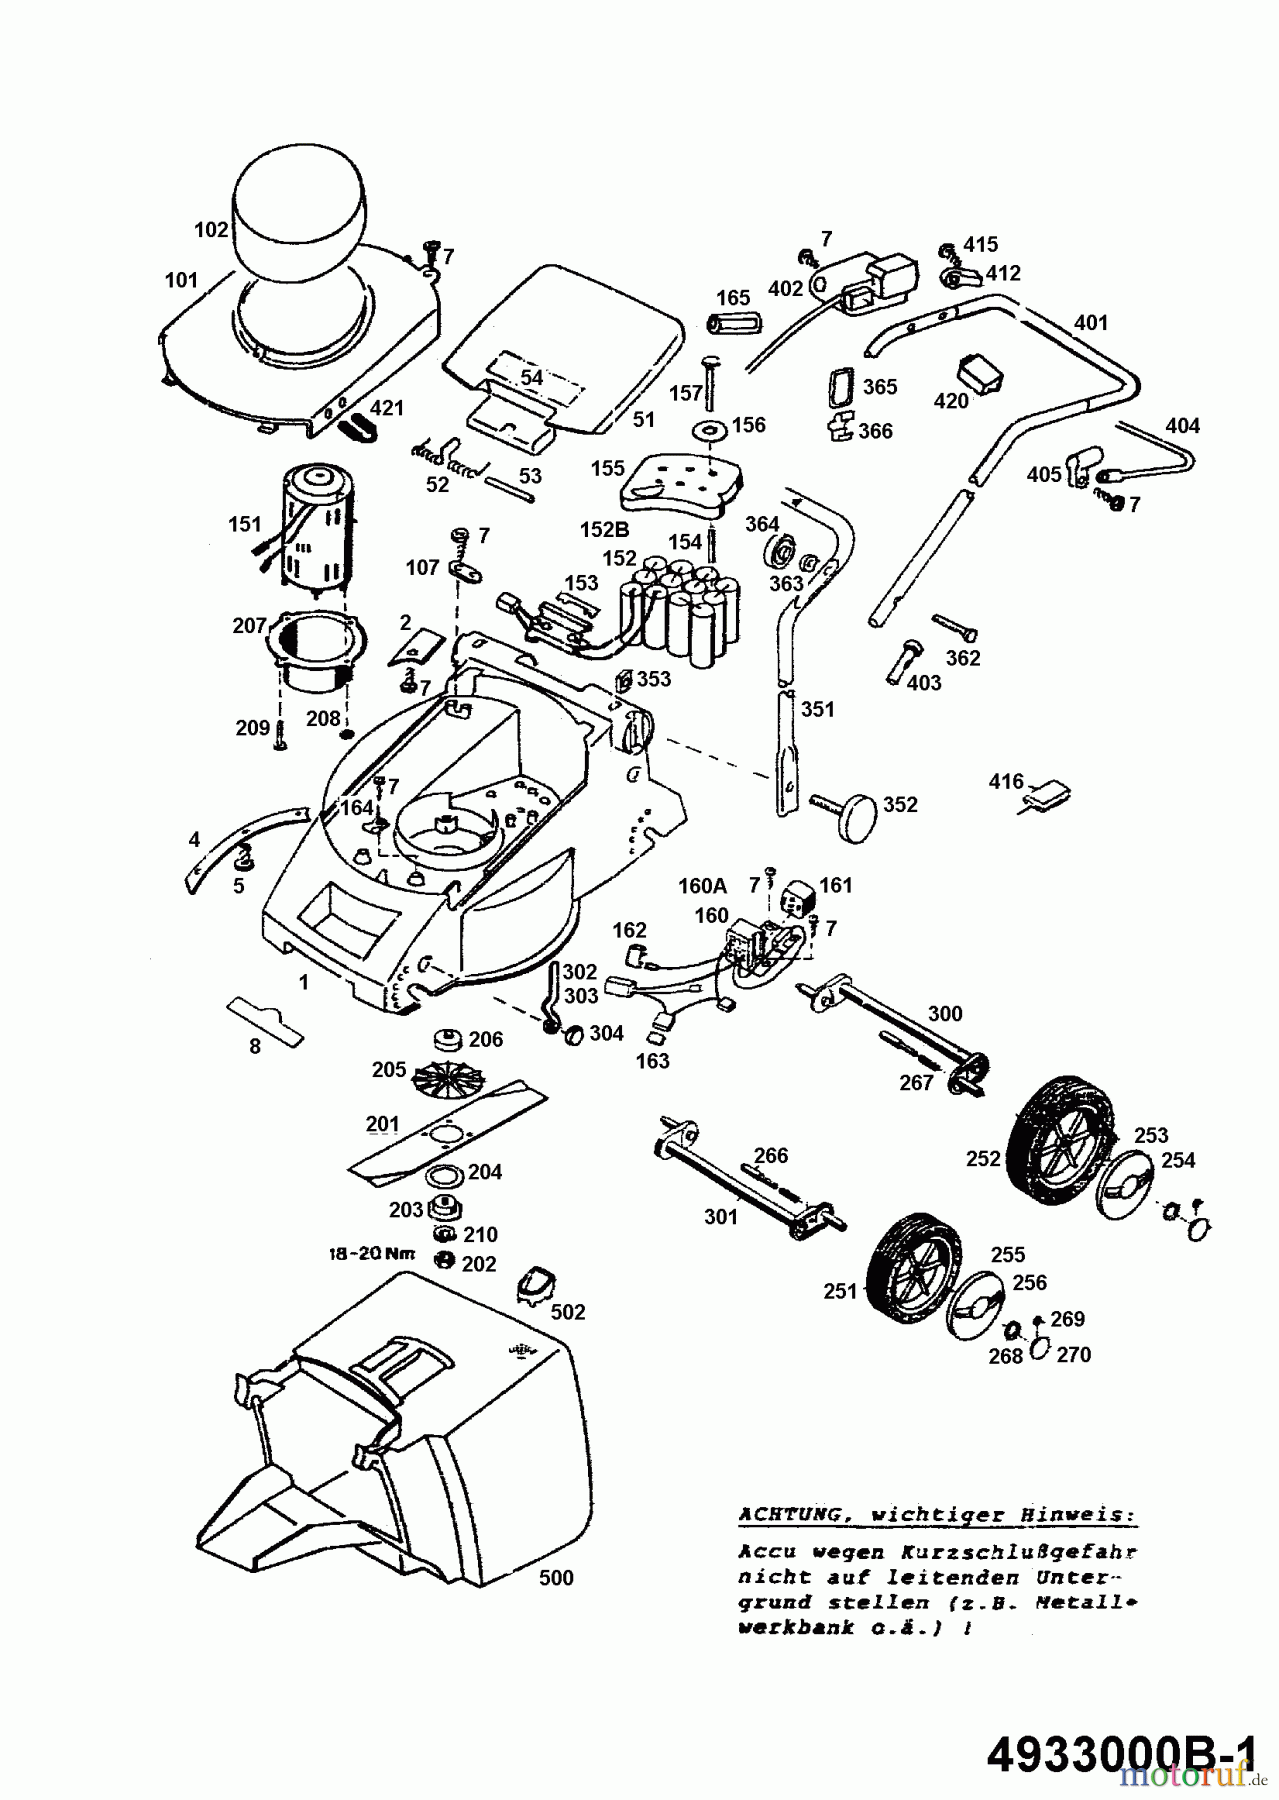  Wolf-Garten Battery mower 6.32 Accu 4933000 Series B  (1995) Basic machine